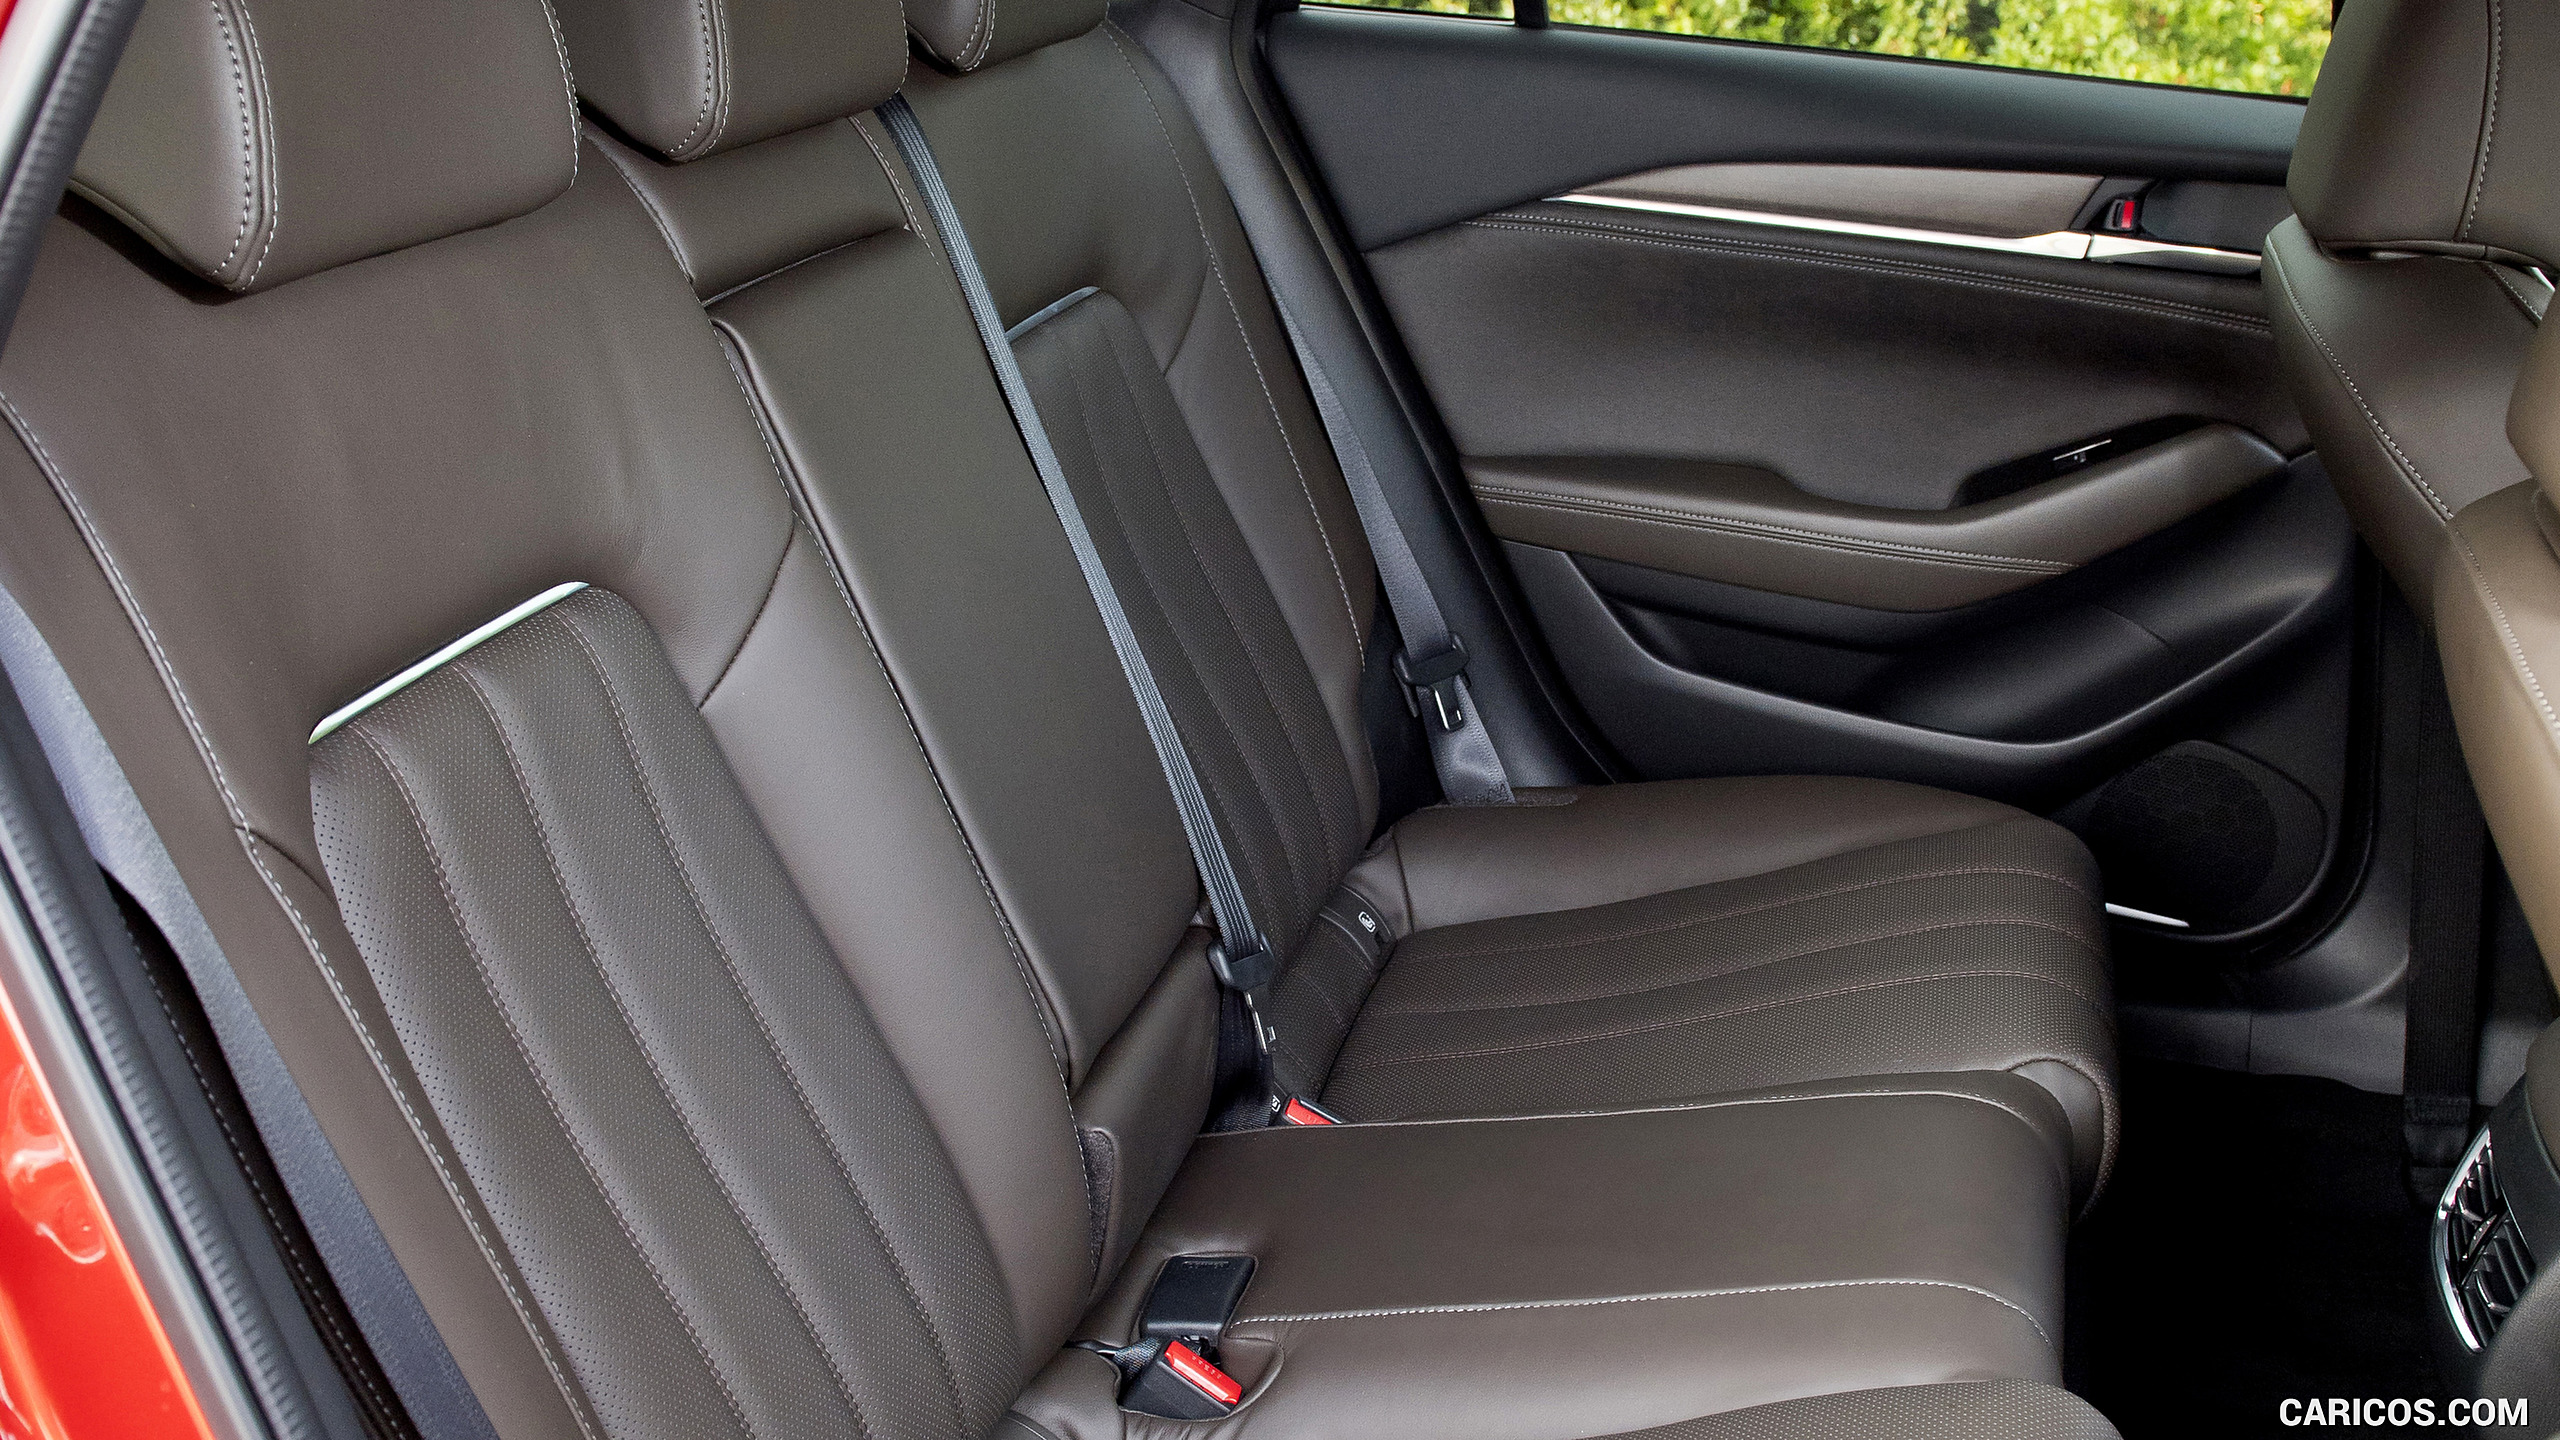 2018 Mazda6 Wagon - Interior, Rear Seats, #234 of 235